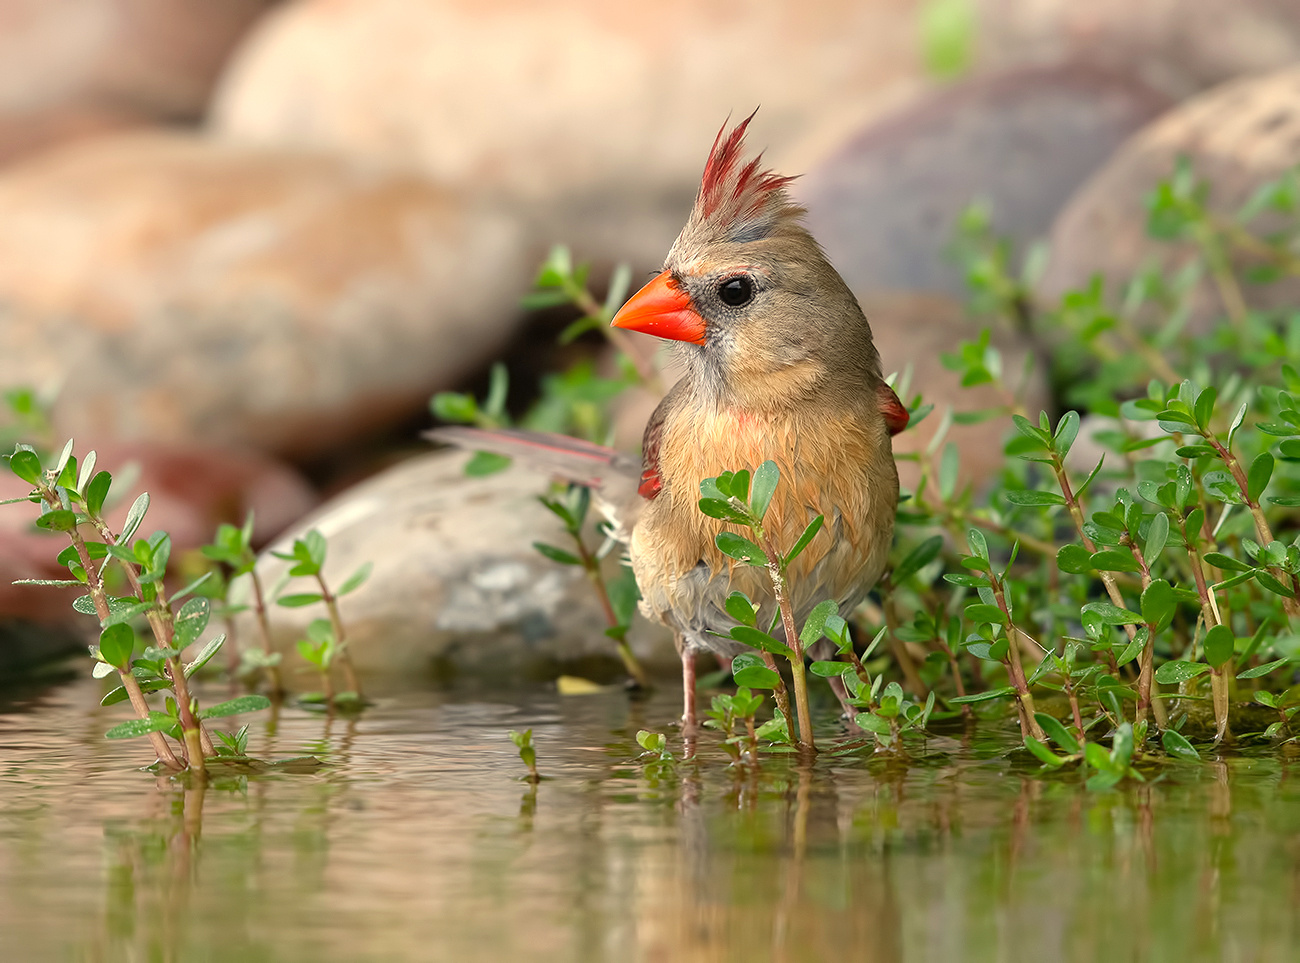 Female Northern Cardinal - Самка. Красный кардинал 